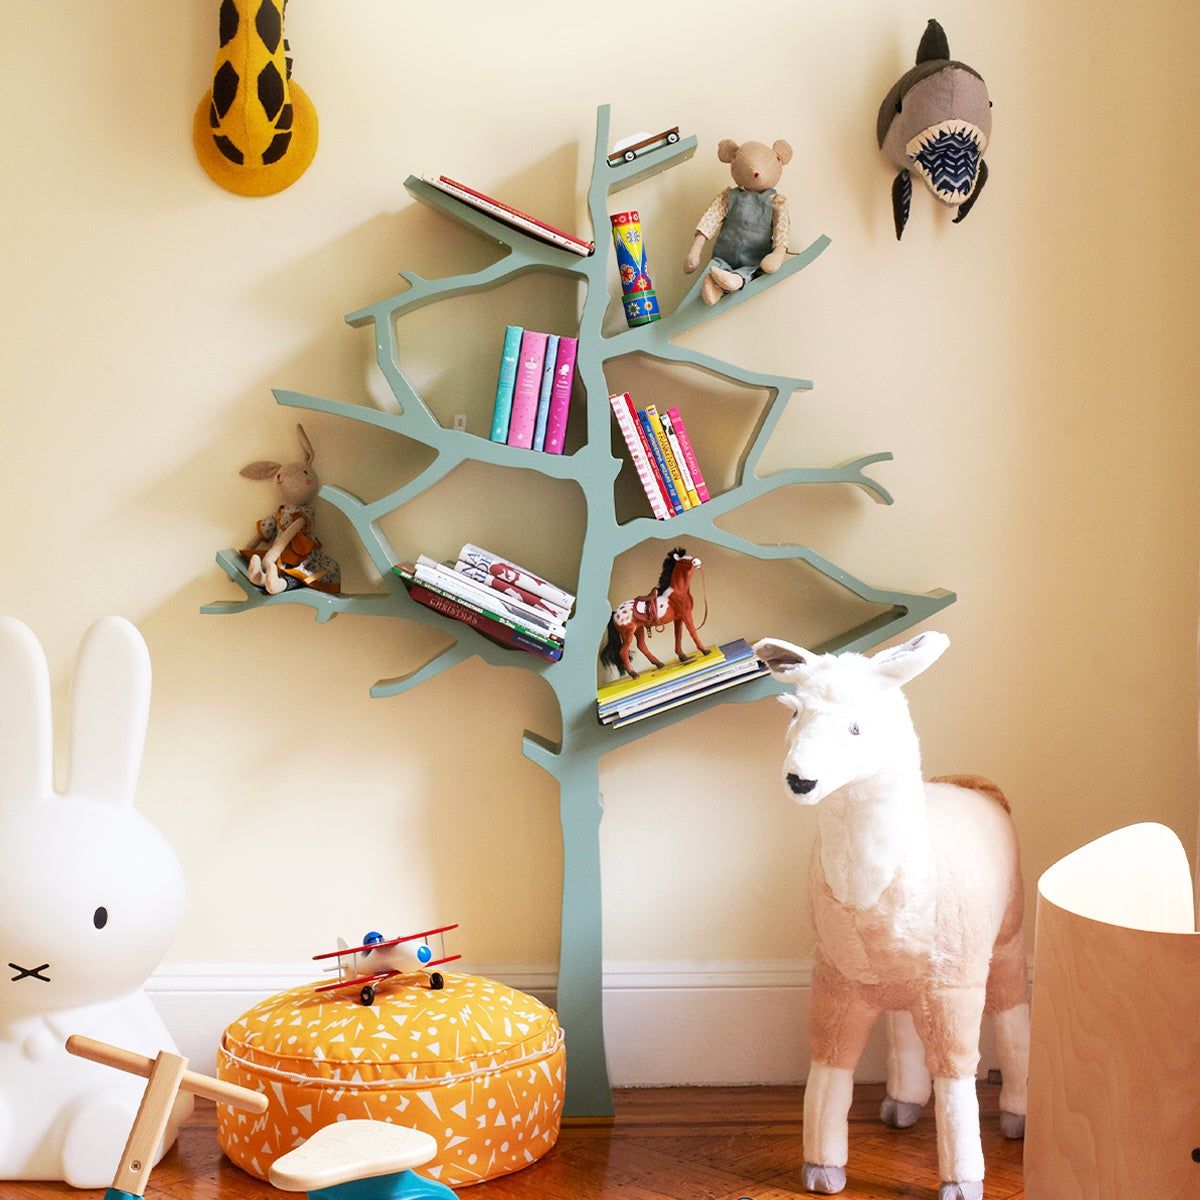 Children's room with a book shelf shaped like a tree